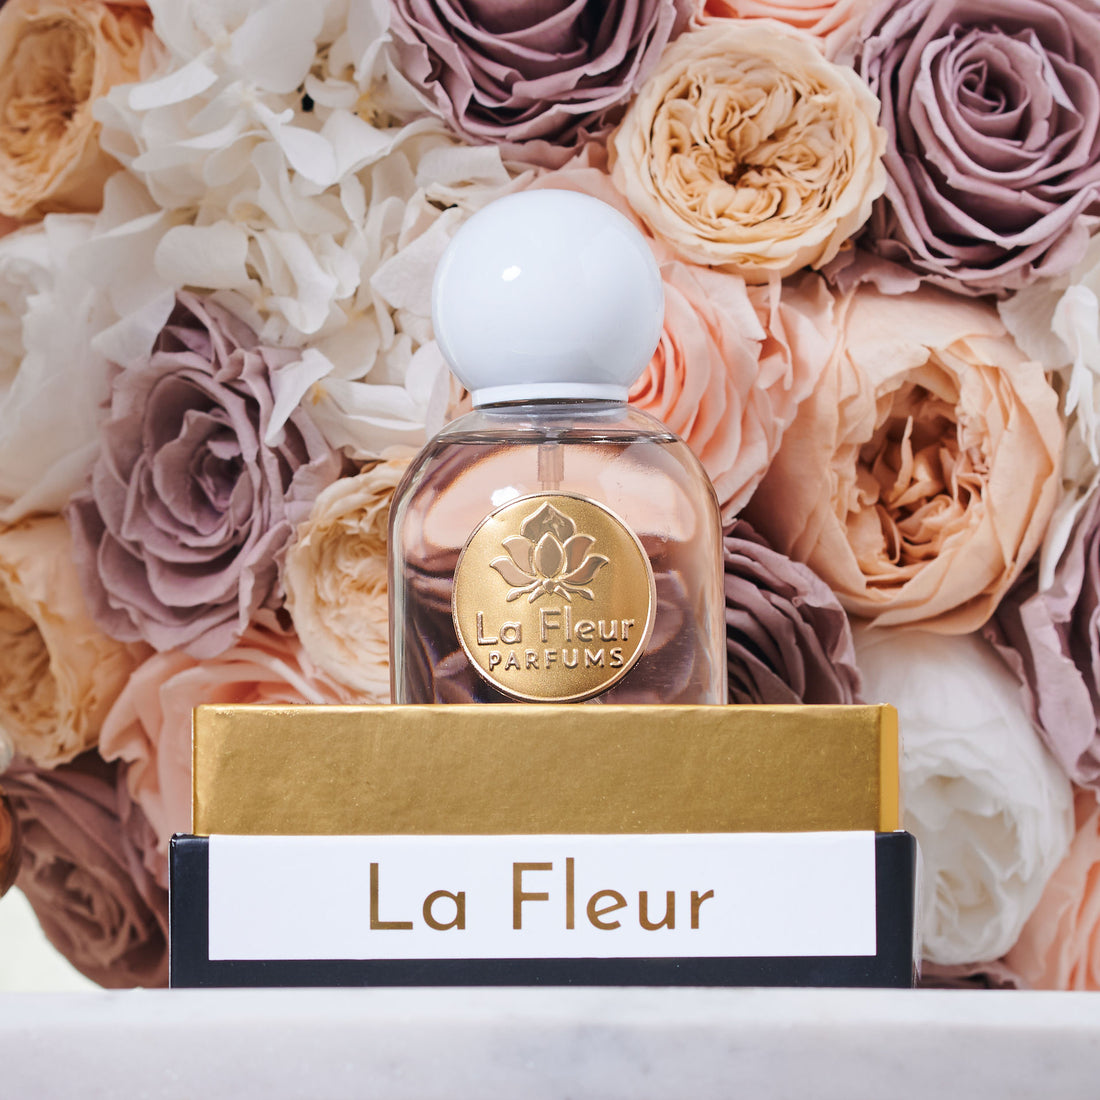 Le La Lo Glass + Gold Lid Candle - Floral Best Mama